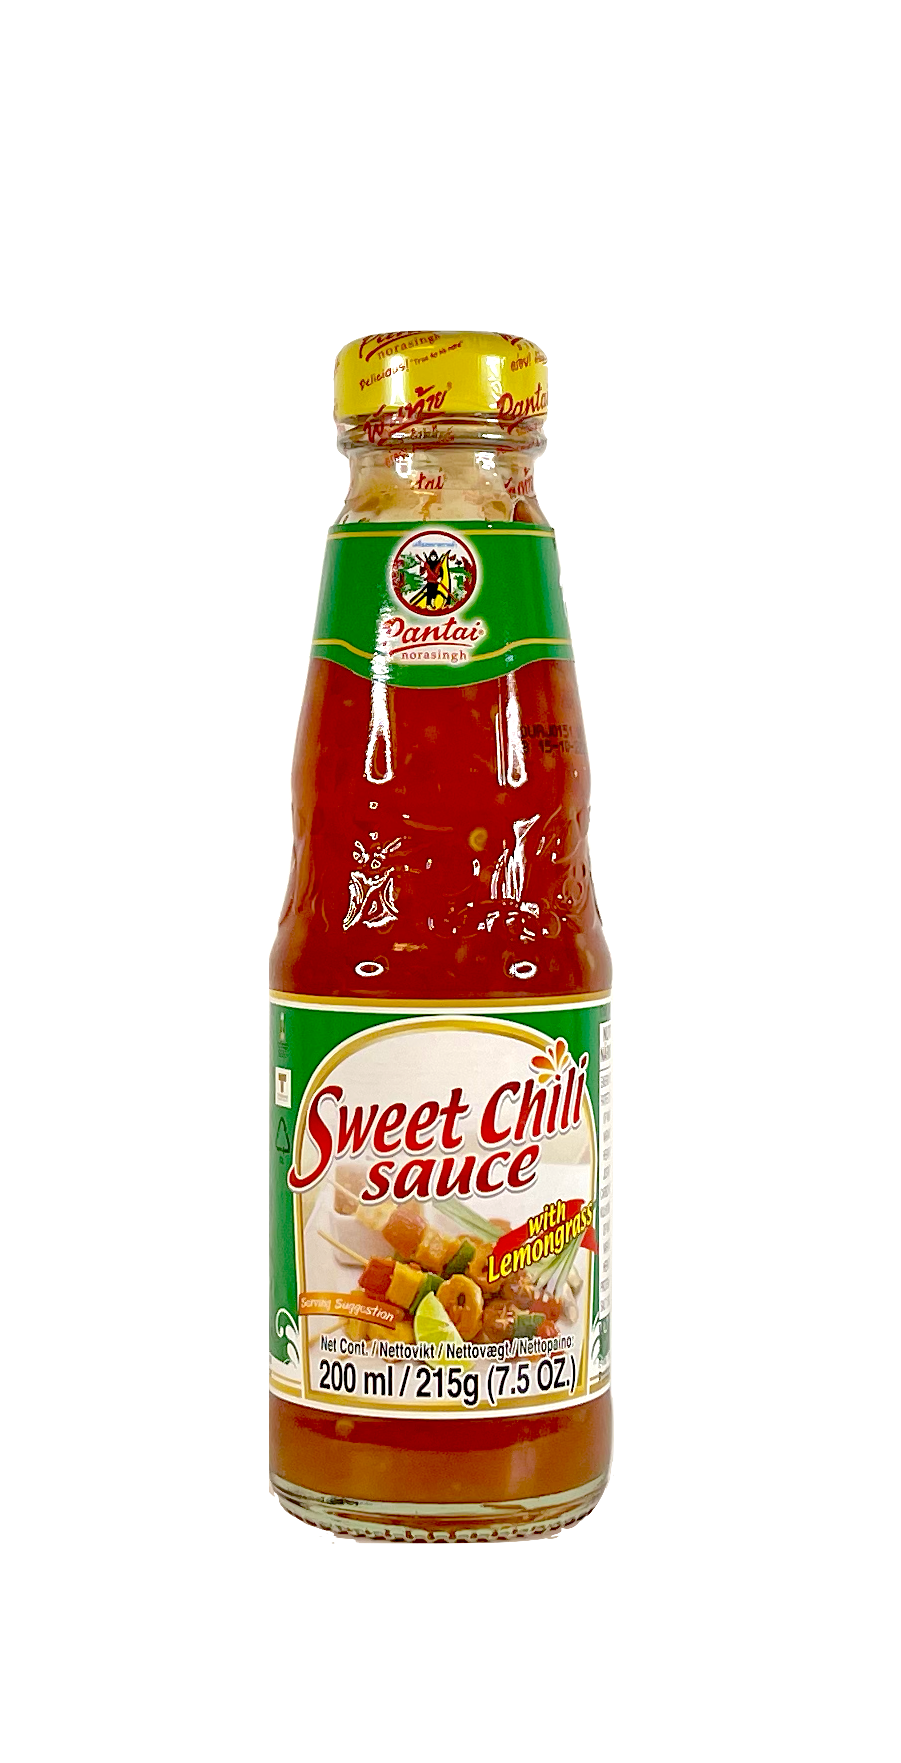 Sweet Chili Sauce With Lemongrass Taste 200ml Pantainorasingh Thailand